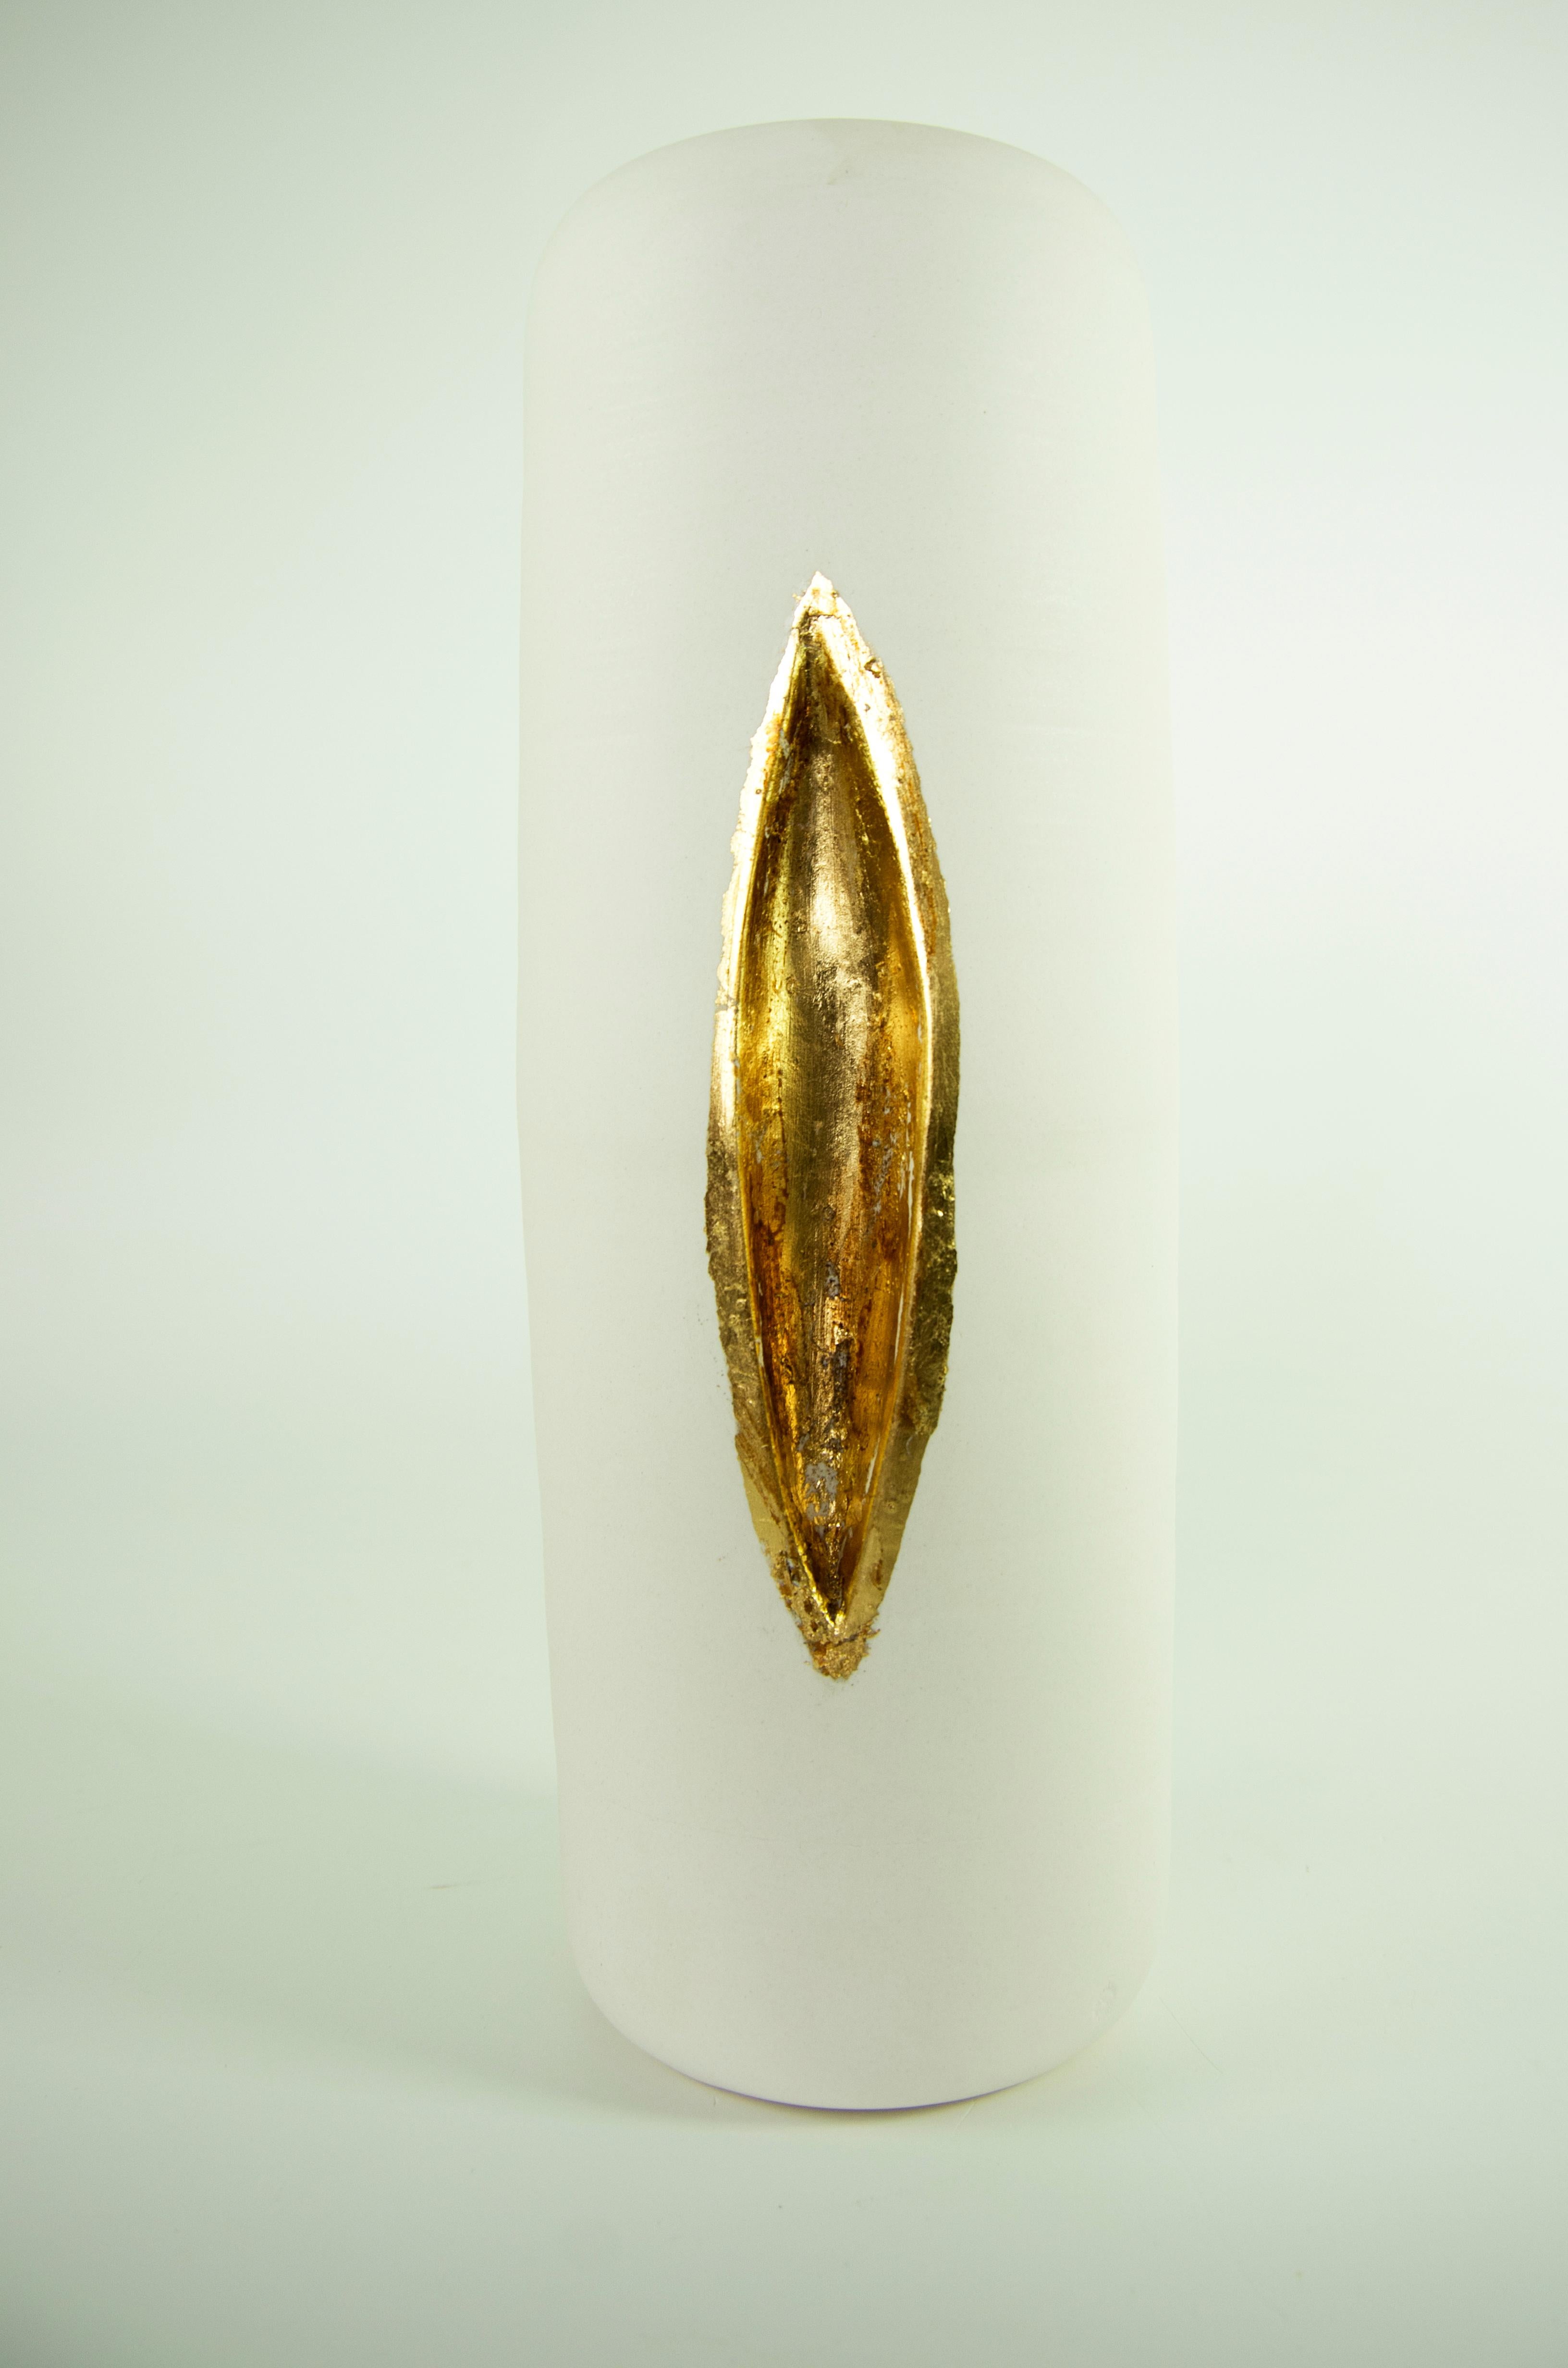 French Set of 2 Volcano Gold Leaf Single Decorative Objects by Dora Stanczel For Sale